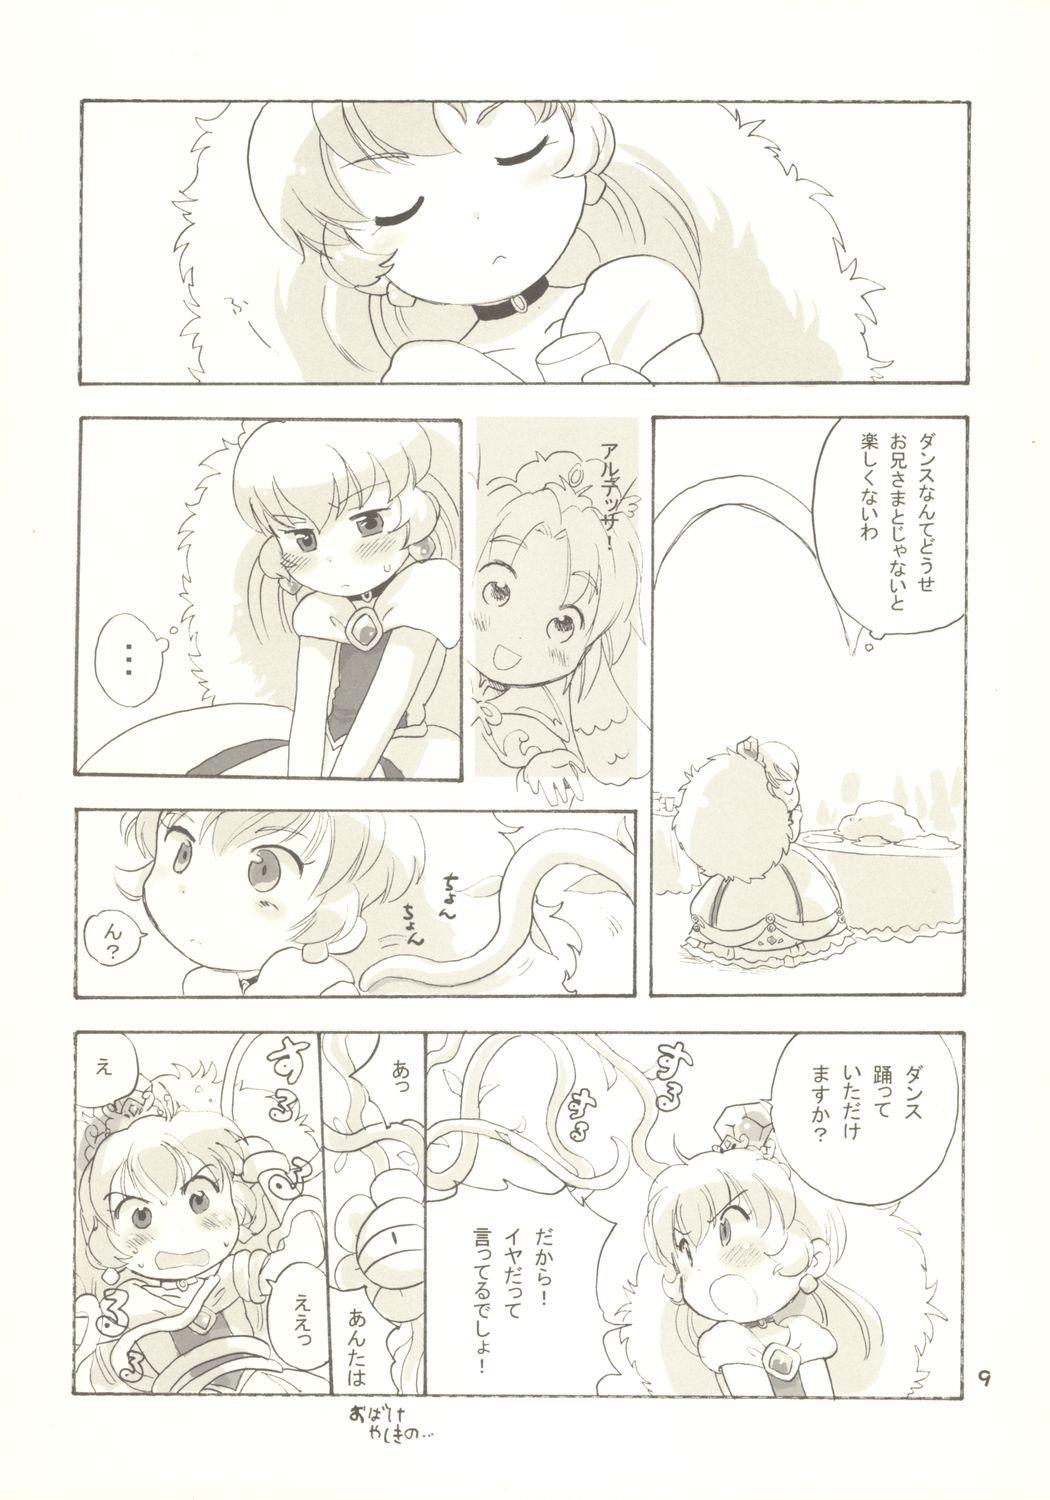 Pounded Egao ni Nare - Please give me smiling face - Fushigiboshi no futagohime Asia - Page 8